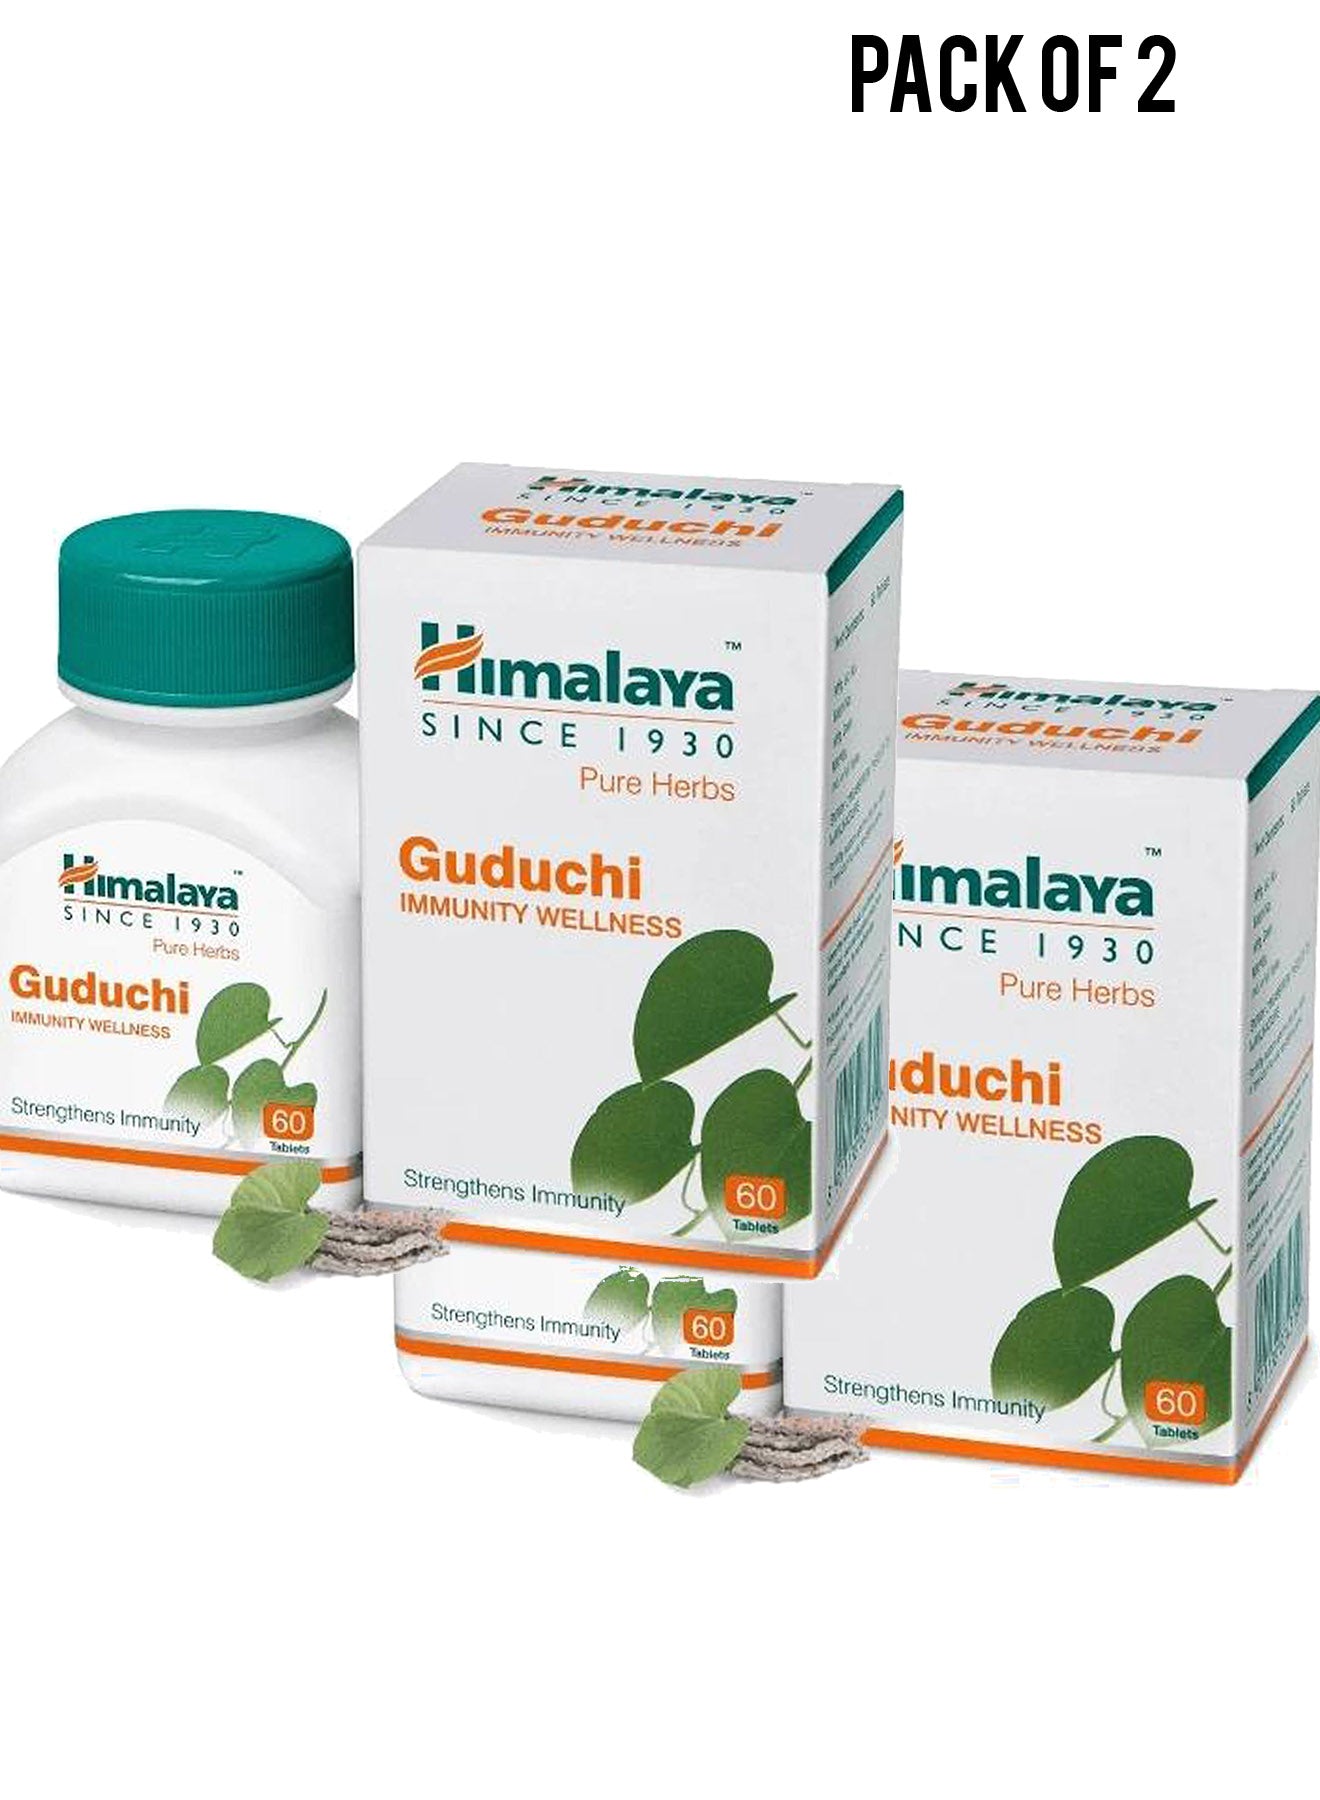 Himalaya Guduchi Pure Herbs 60 Tablets Value Pack of 2 